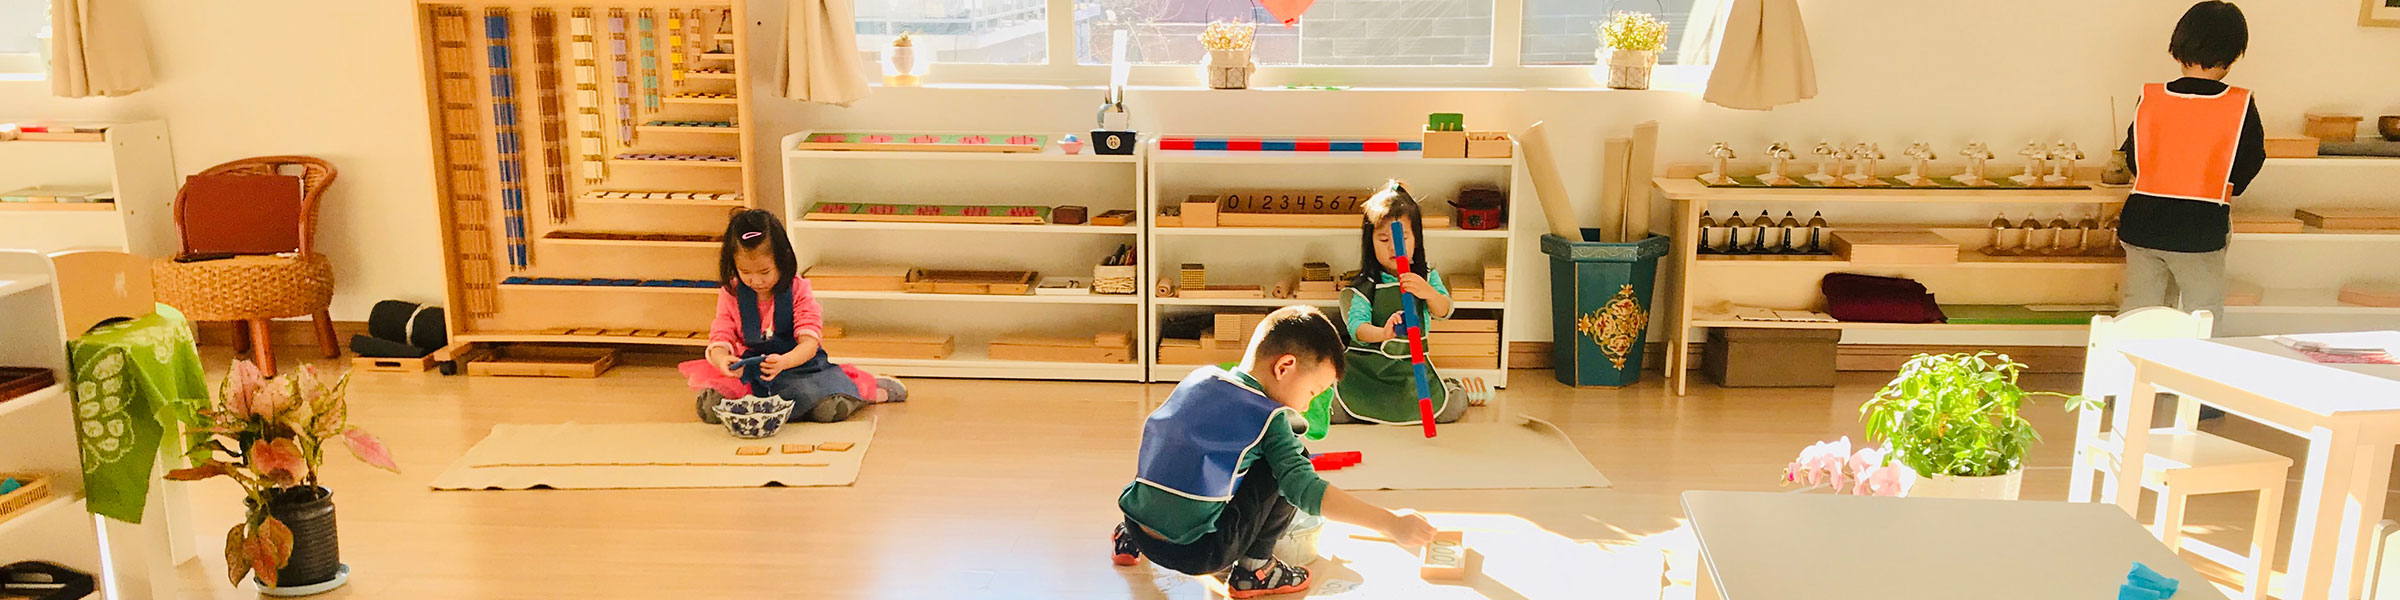 Montessori primary classroom environment